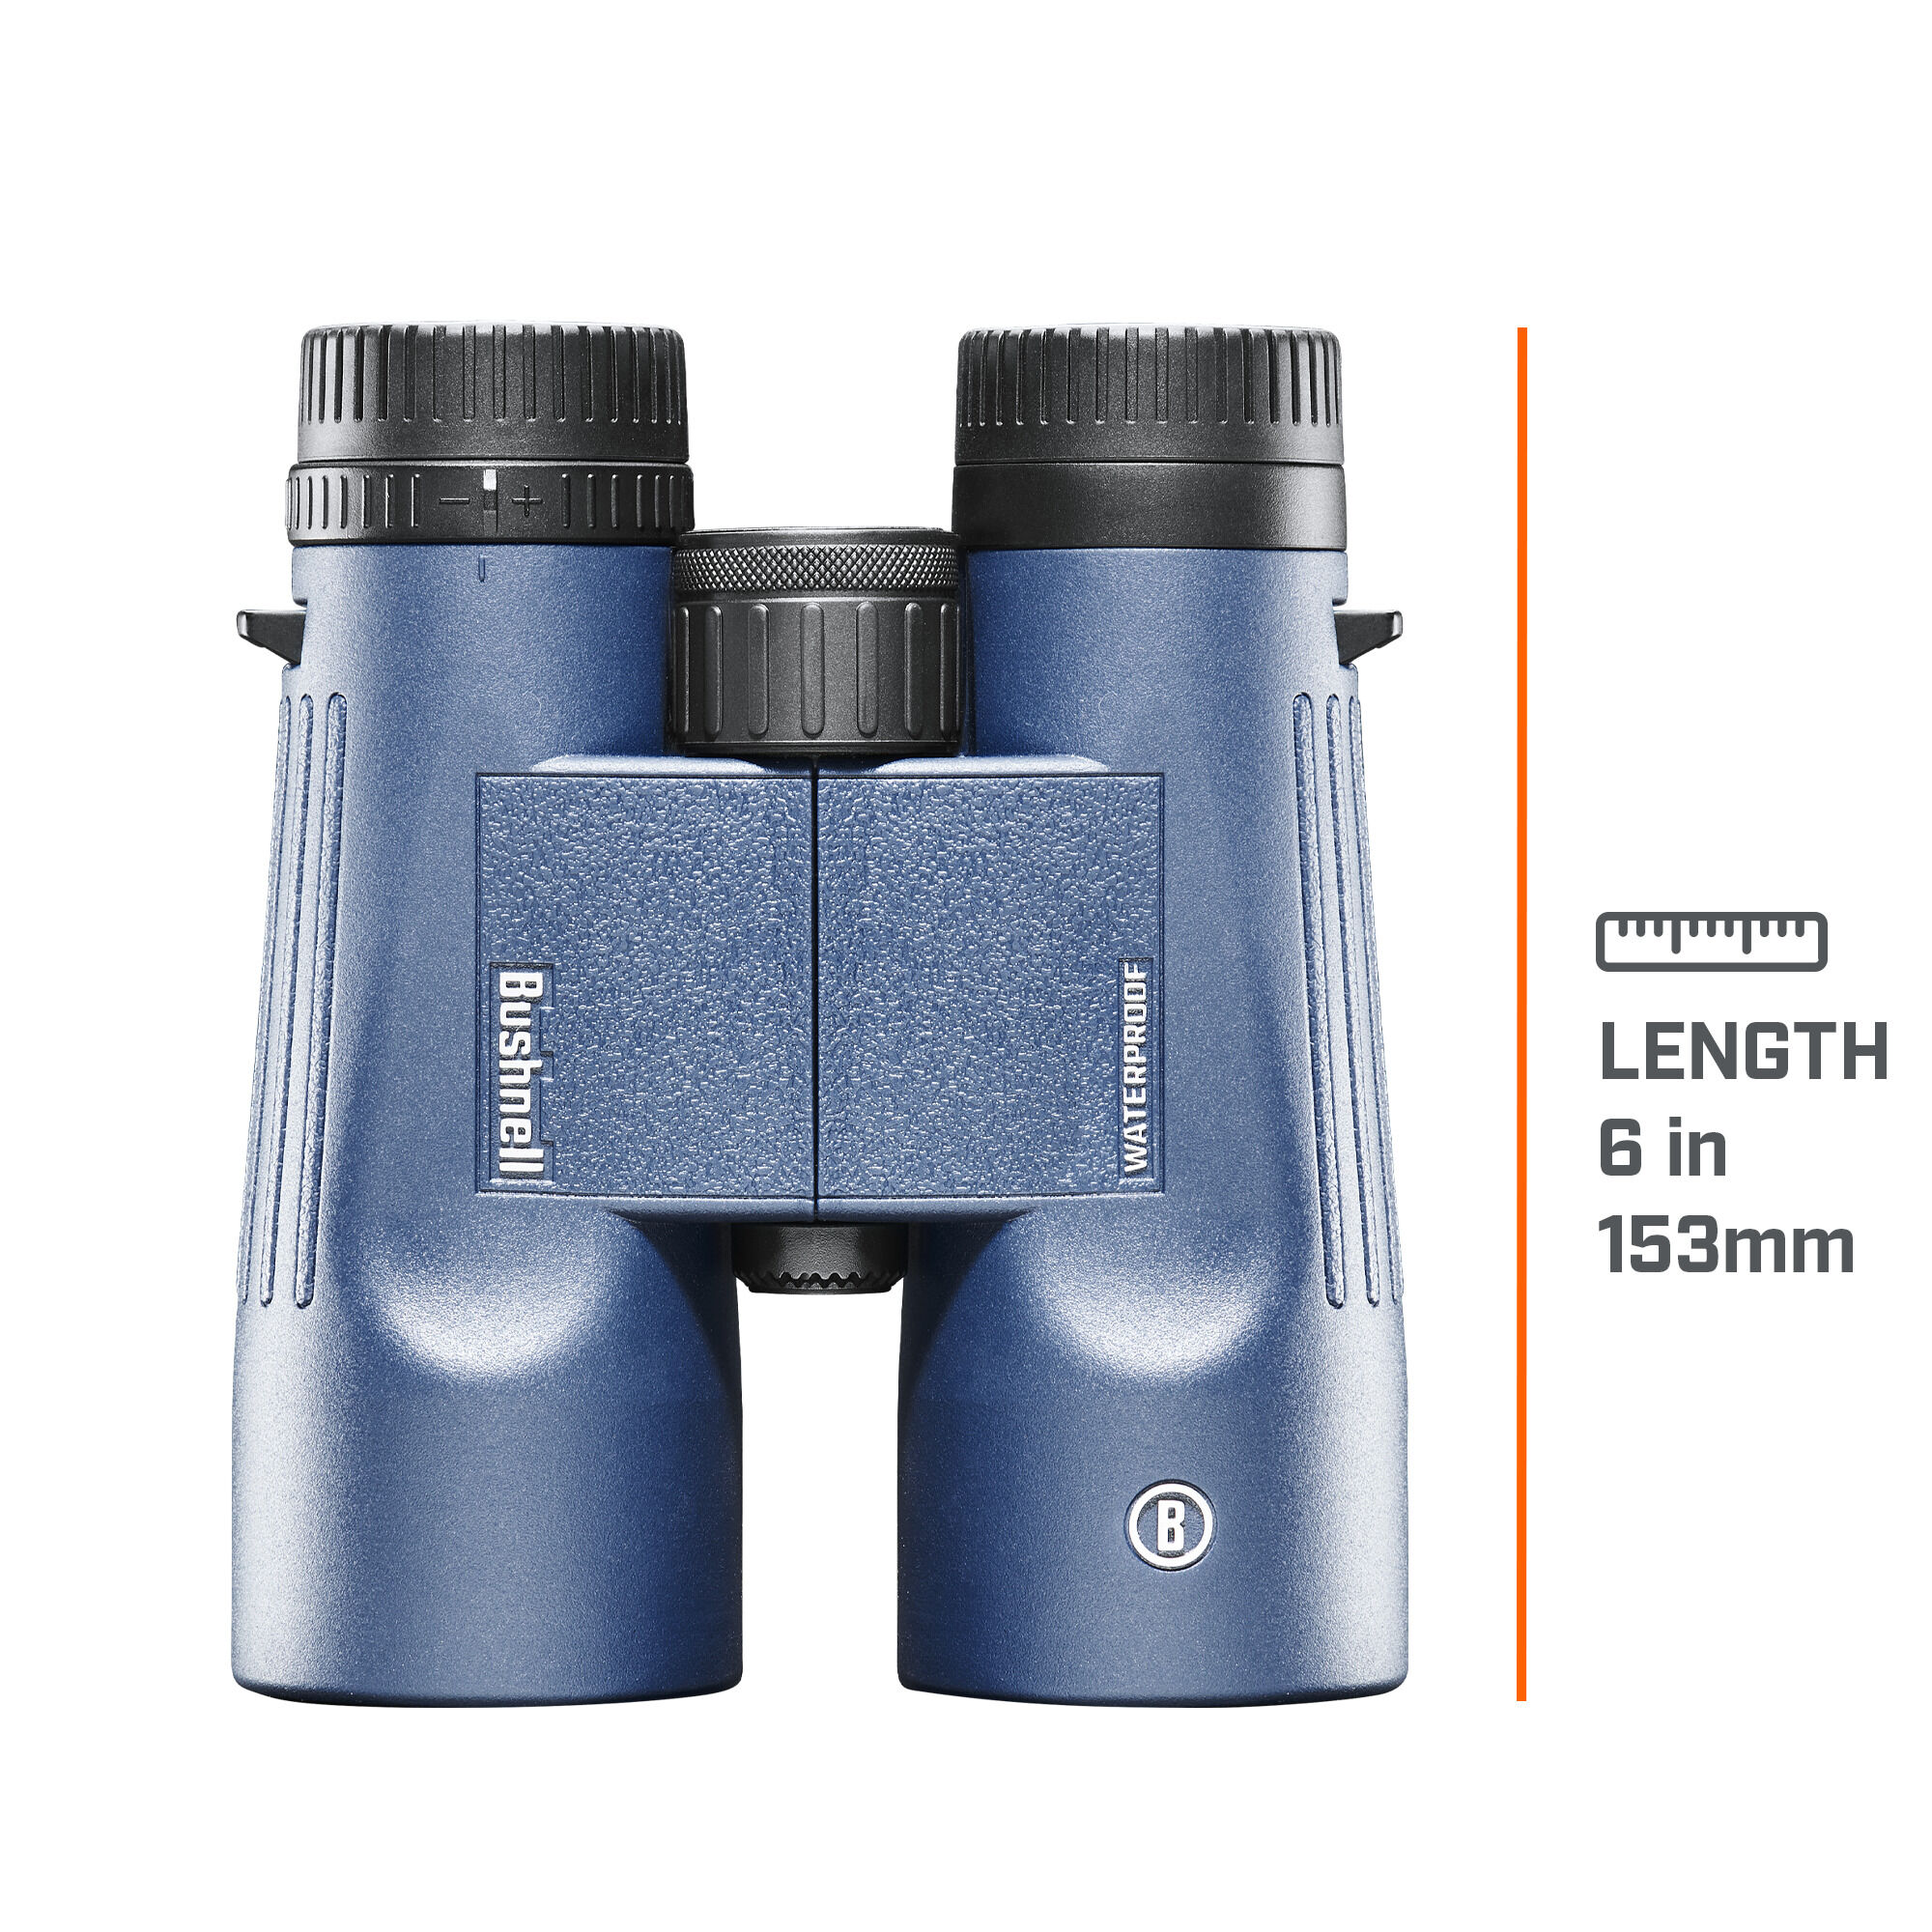 H20 Waterproof Binoculars, 8x42 Magnification | Bushnell